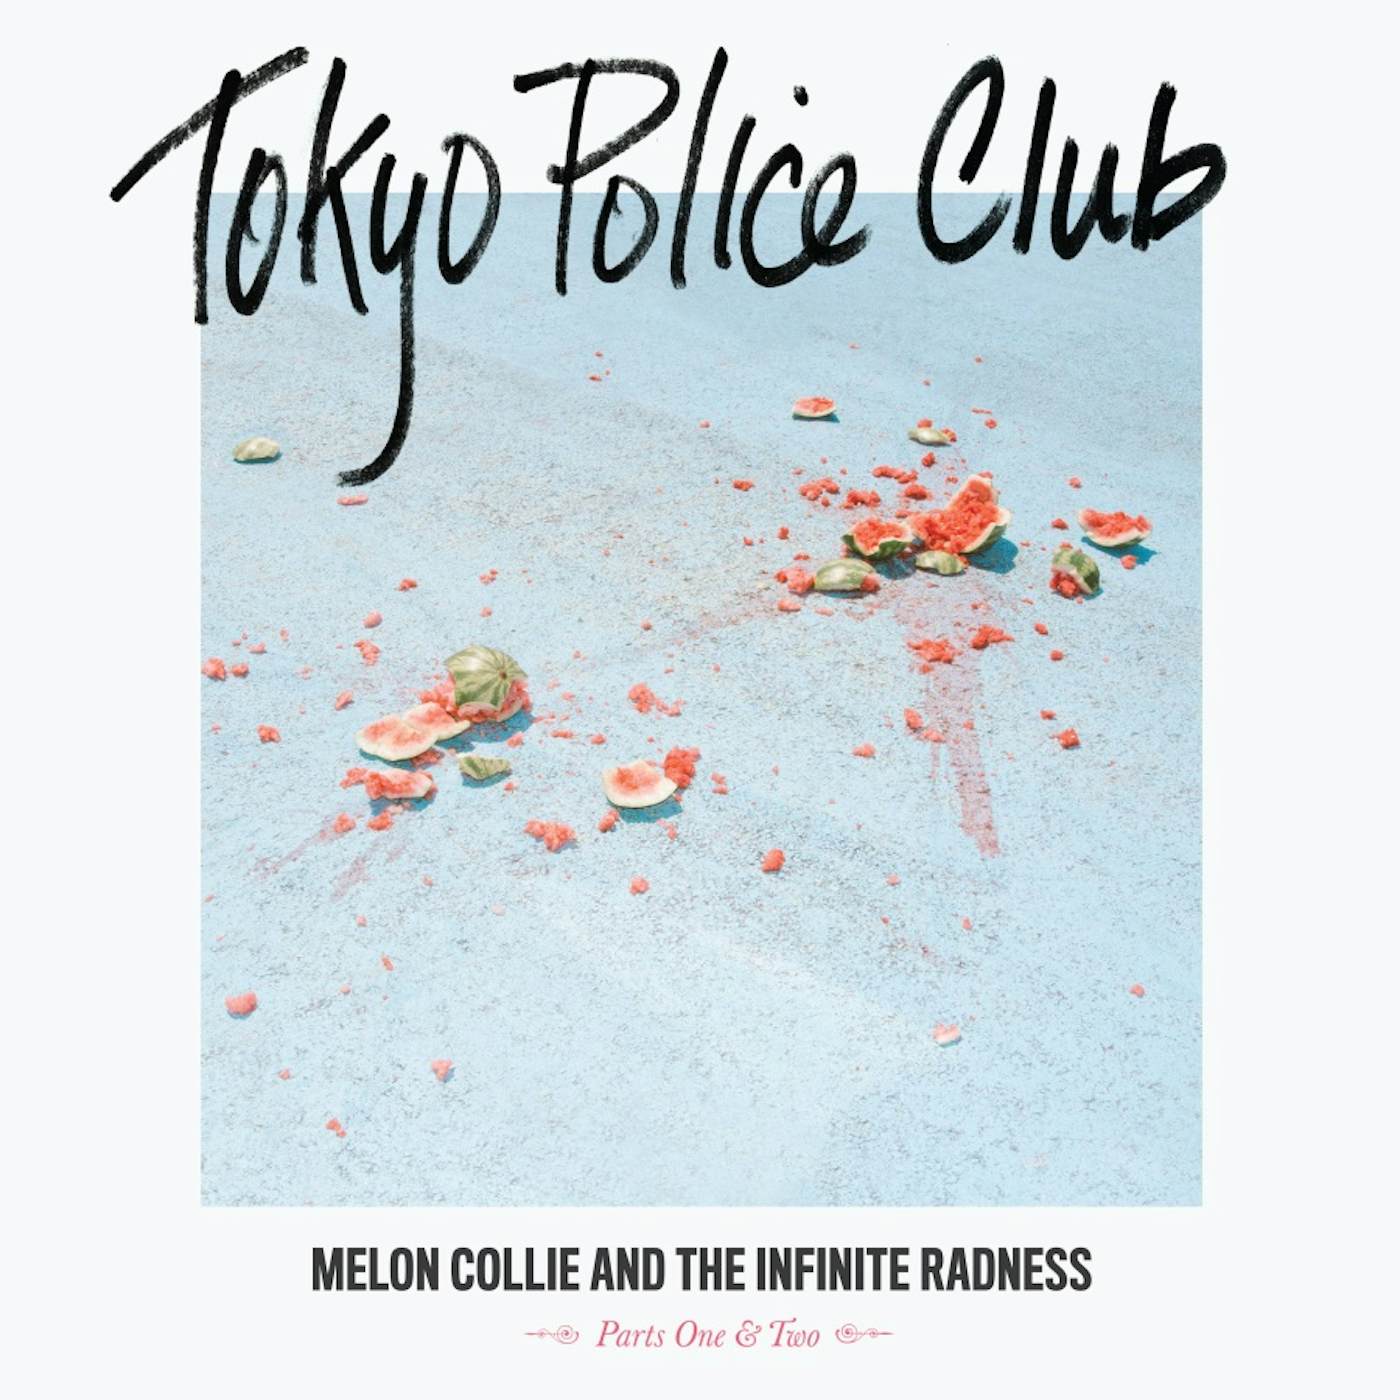 Tokyo Police Club MELON COLLIE & THE INFINITE RADNESS (PART 1 & 2) Vinyl Record